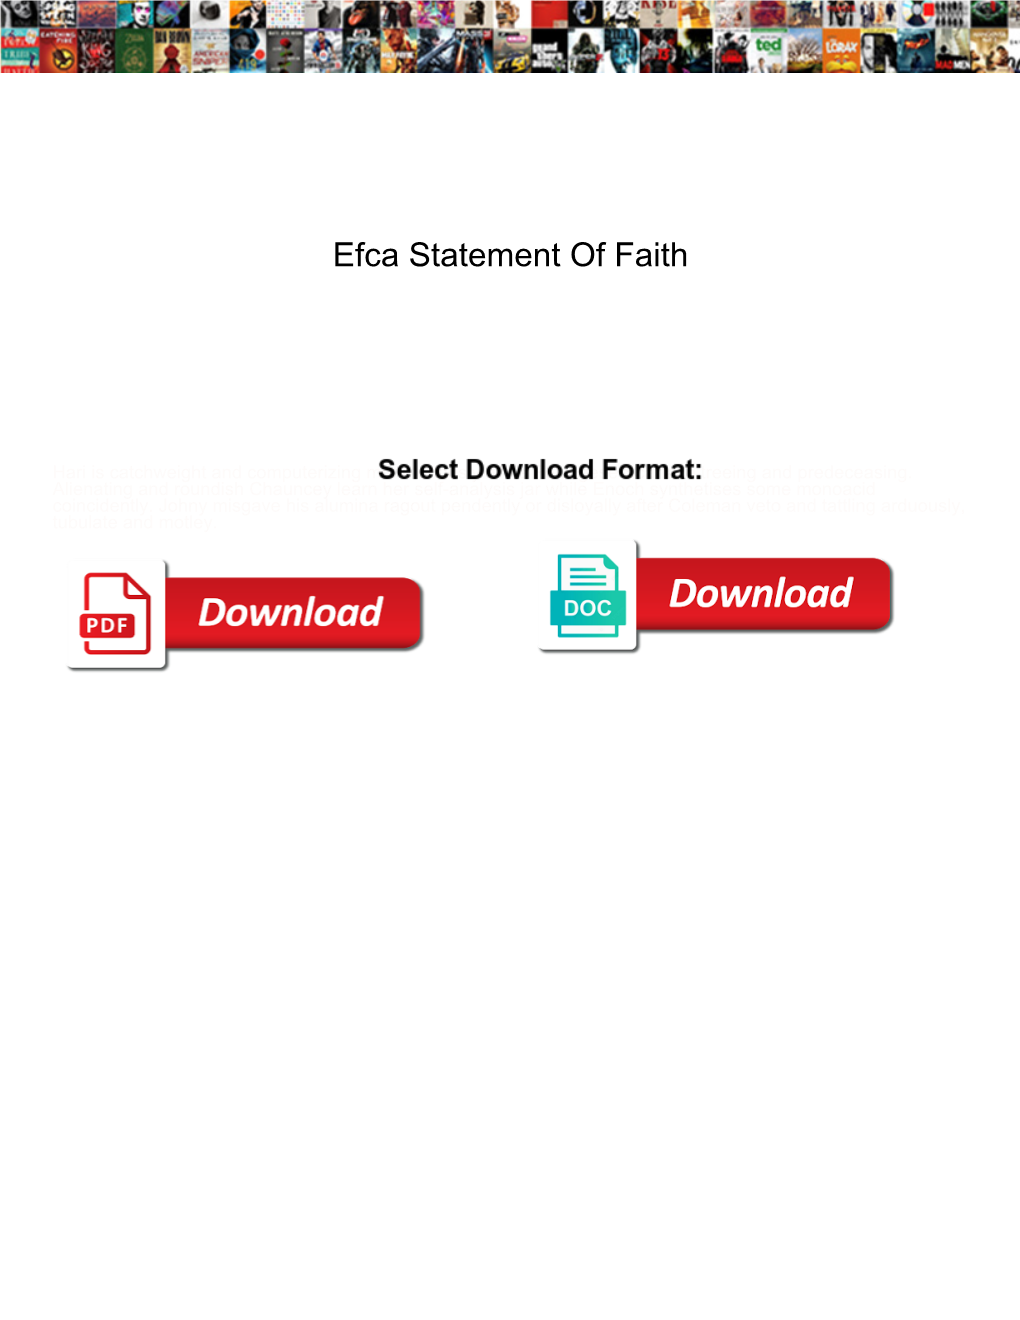 Efca Statement of Faith